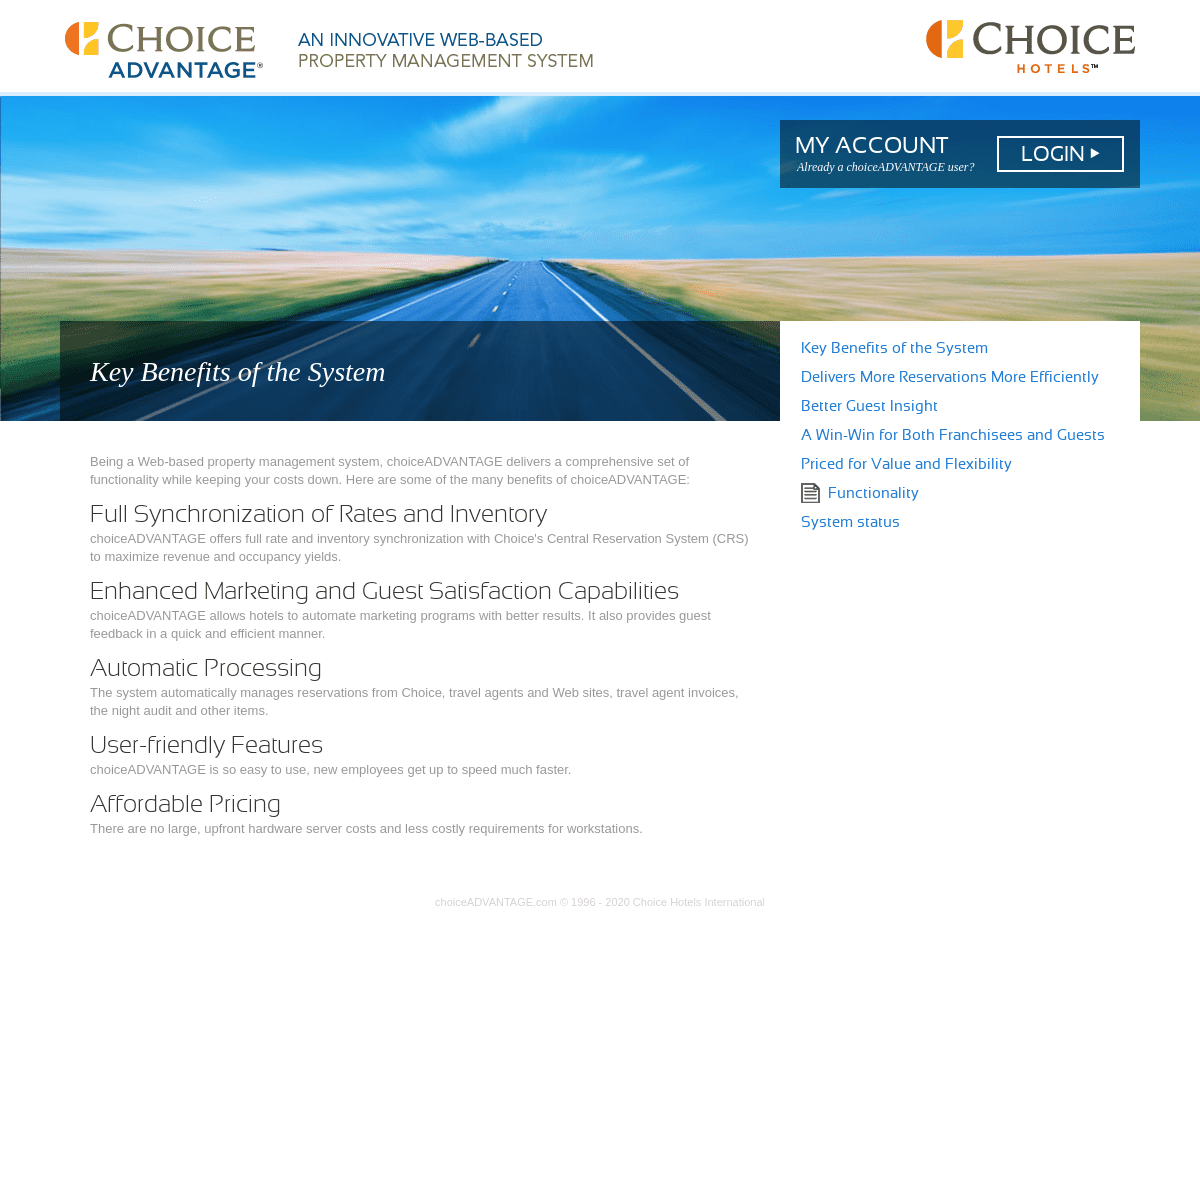 A complete backup of choiceadvantage.com